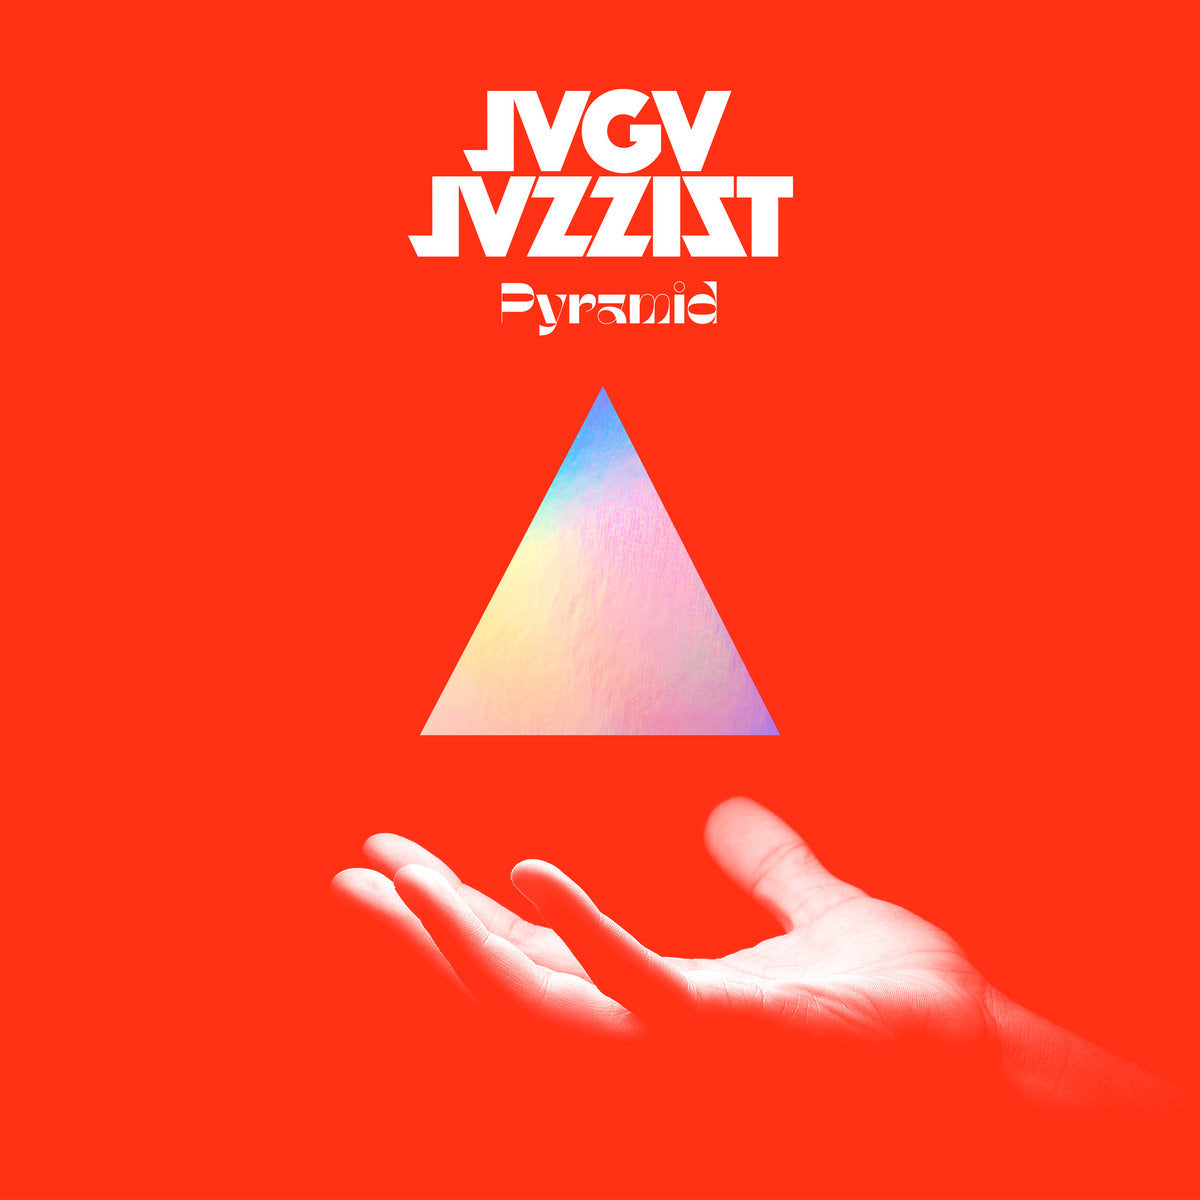 JAGA JAZZIST - Pyramid - LP - Crystal Clear Vinyl